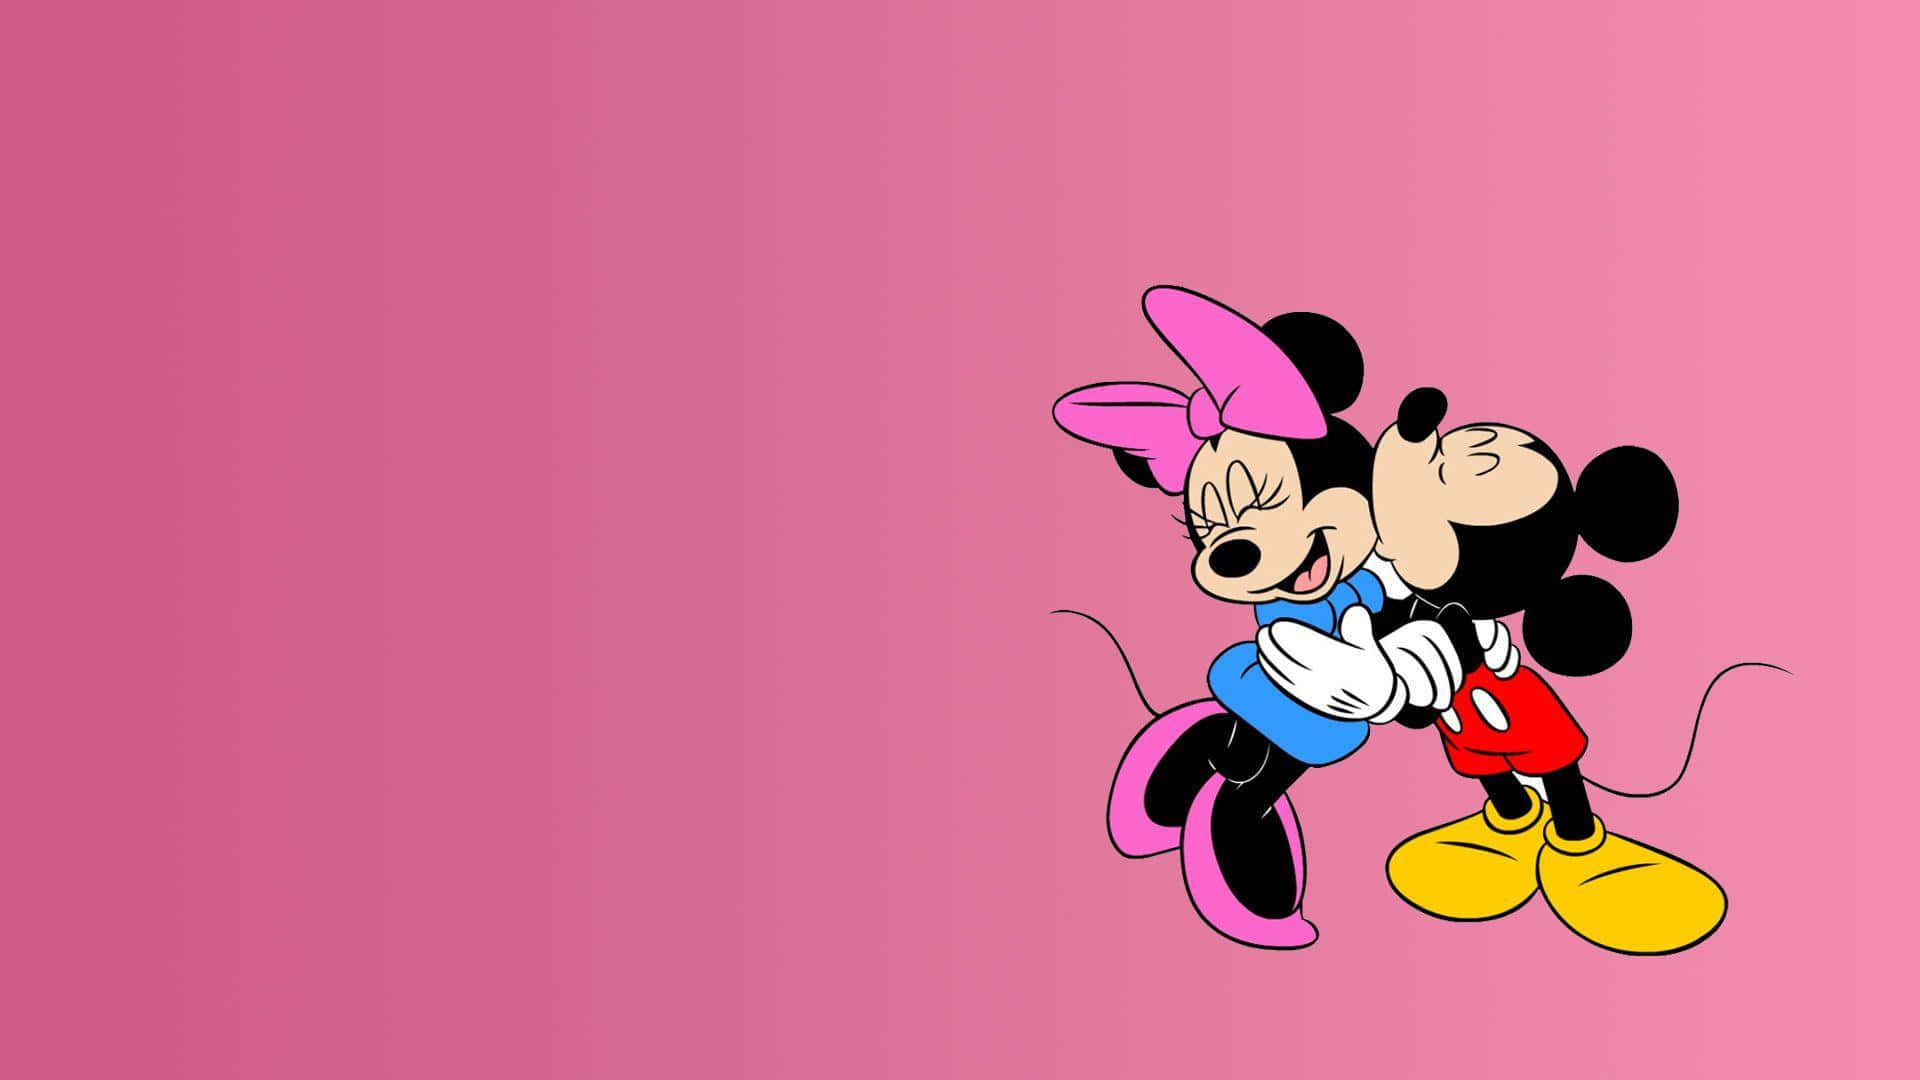 Disney'smickey Och Minnie Mus Möts I En Öm Stund.